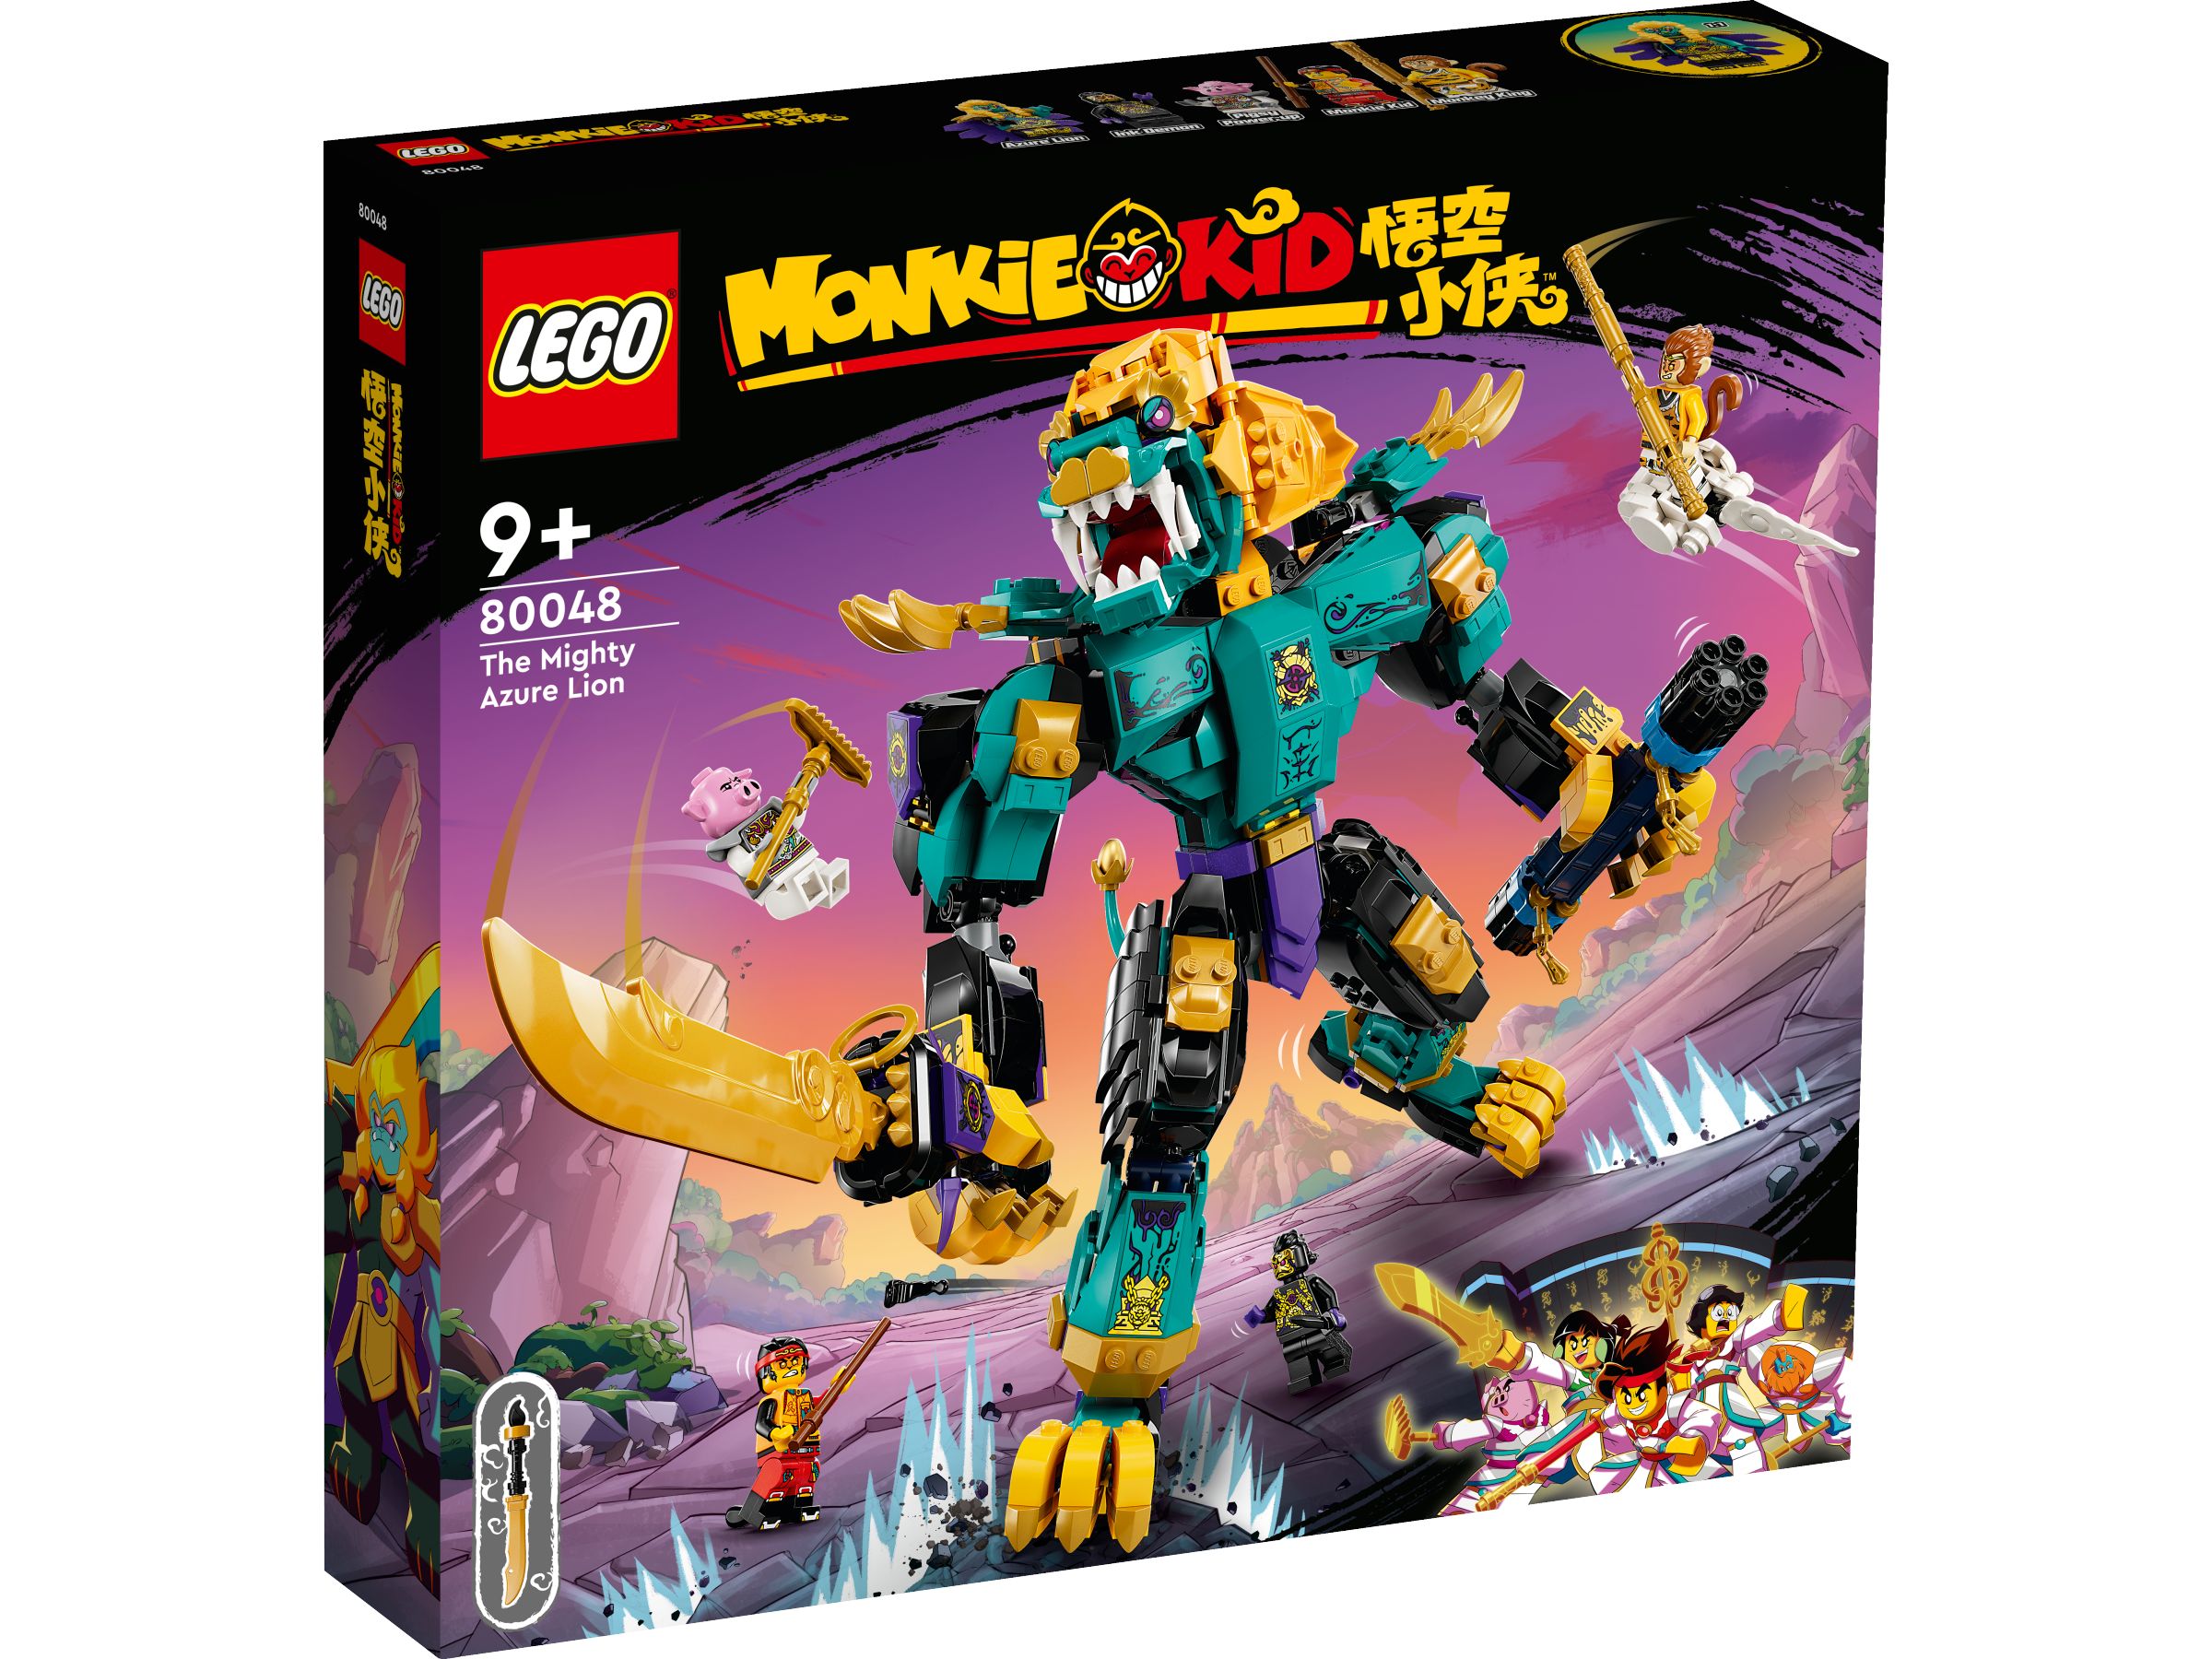 LEGO Monkie Kid 80048 Der mächtige Azure Lion LEGO_80048_Box1_v29.jpg